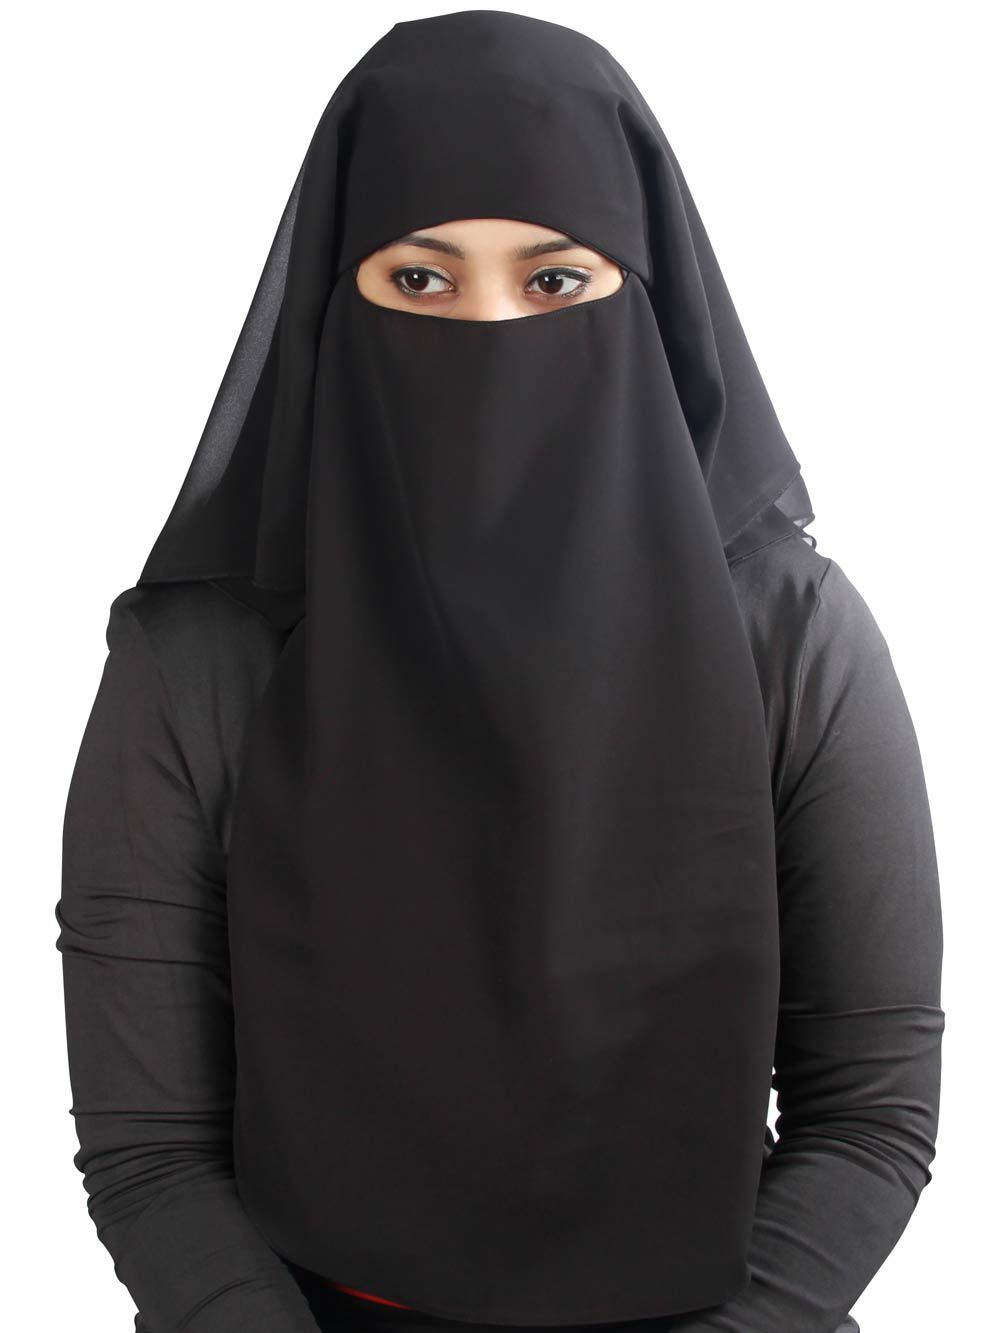 Buy 3 Layers Niqab In Soft Georgette Online MyBatua